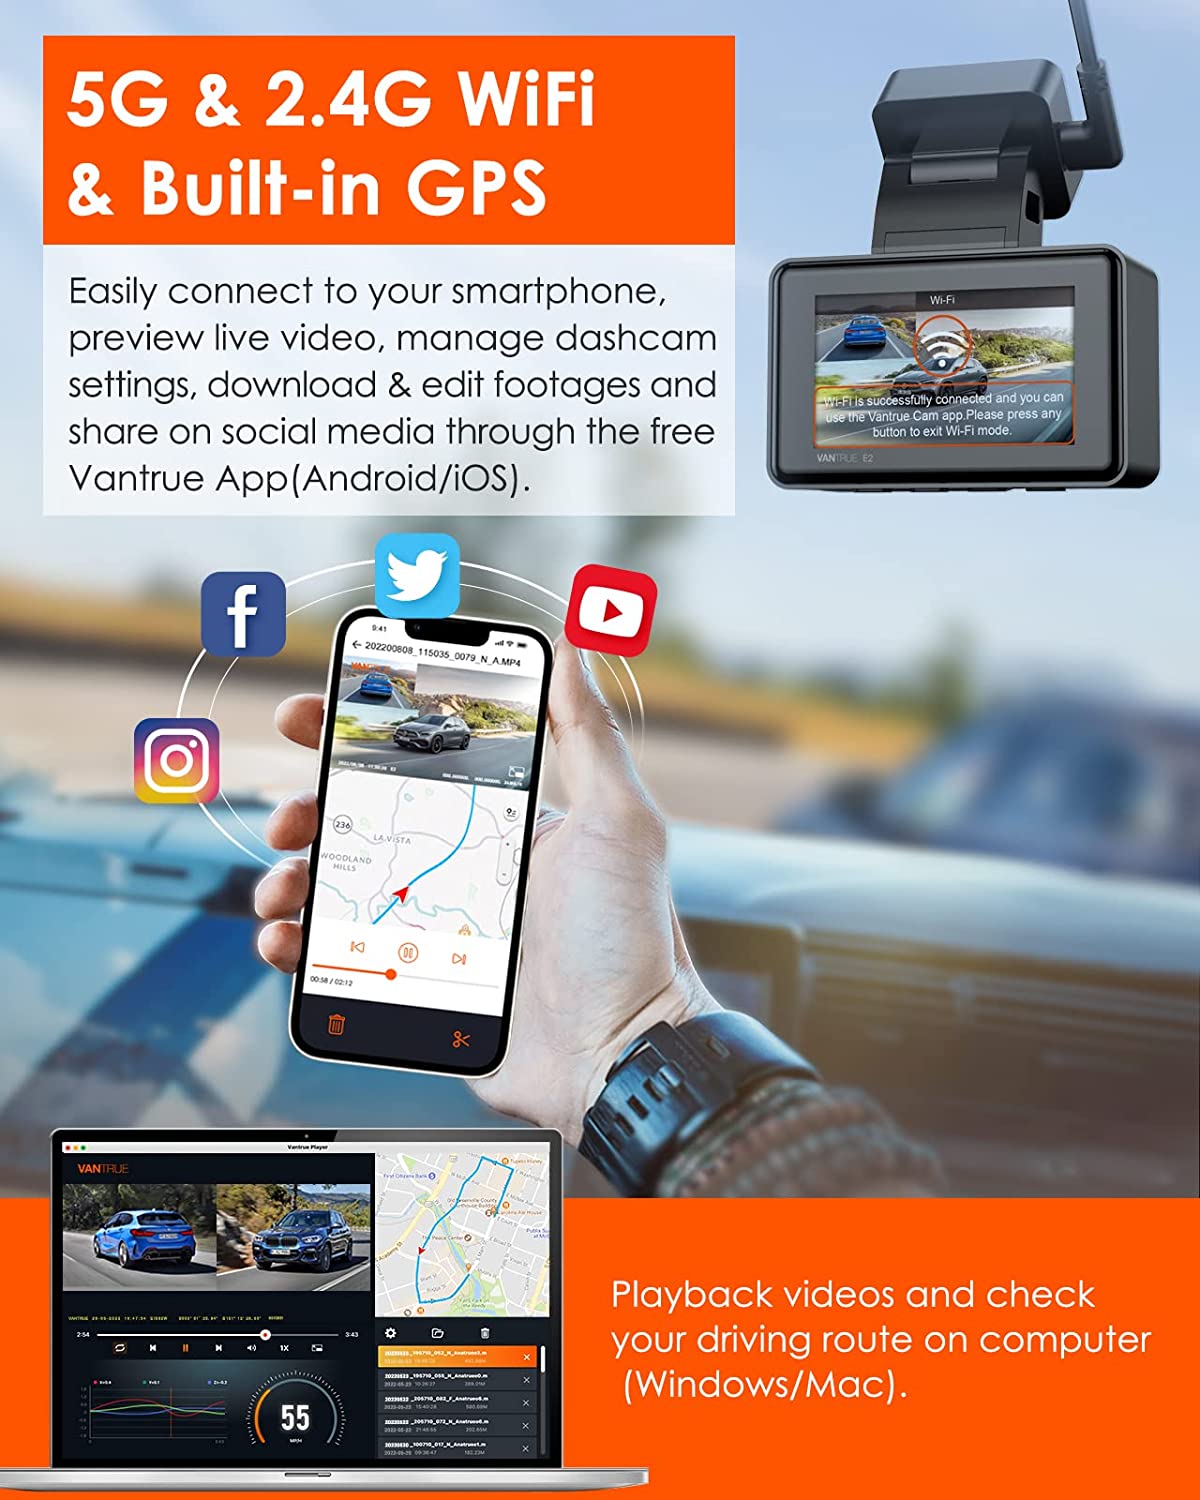 Vantrue X4s 4K WiFi Dash Cam, Parking Mode, Night Vision, G-Sensor